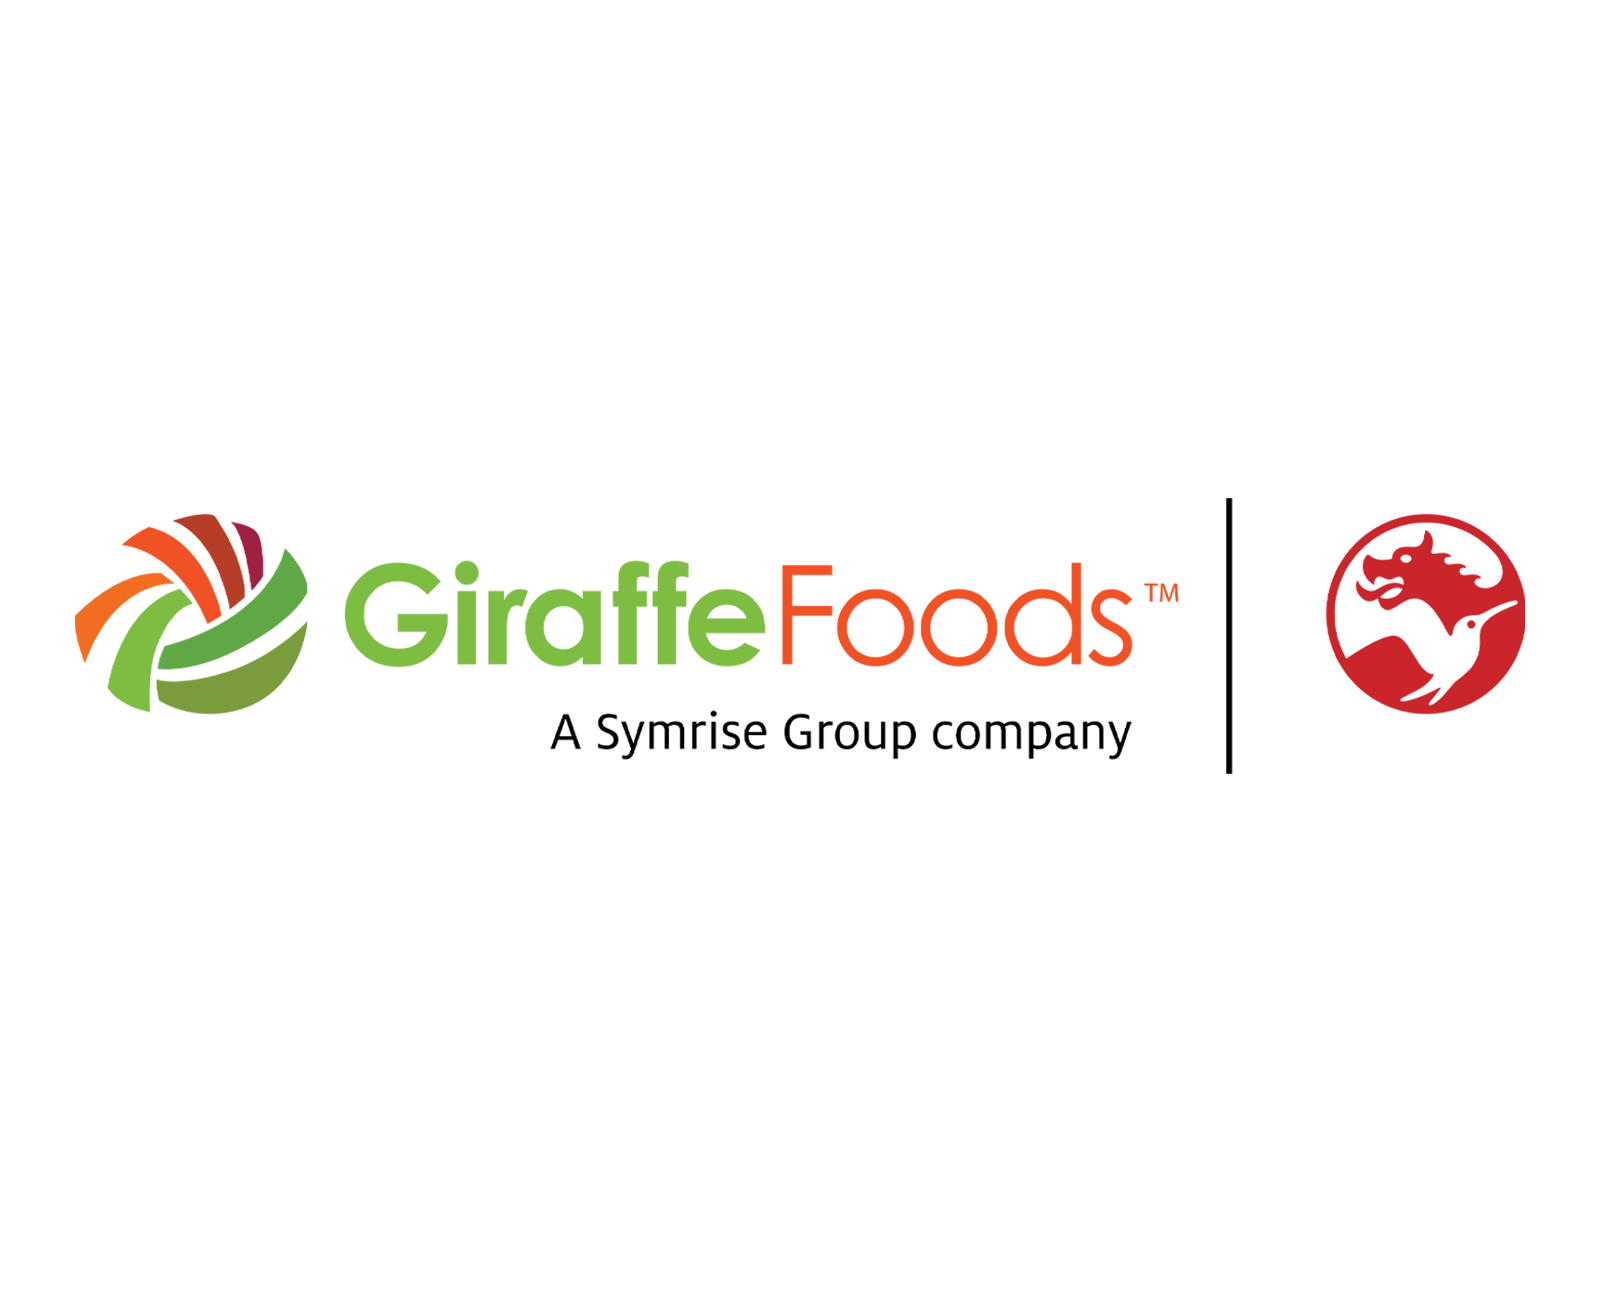 Giraffe Symrise logo